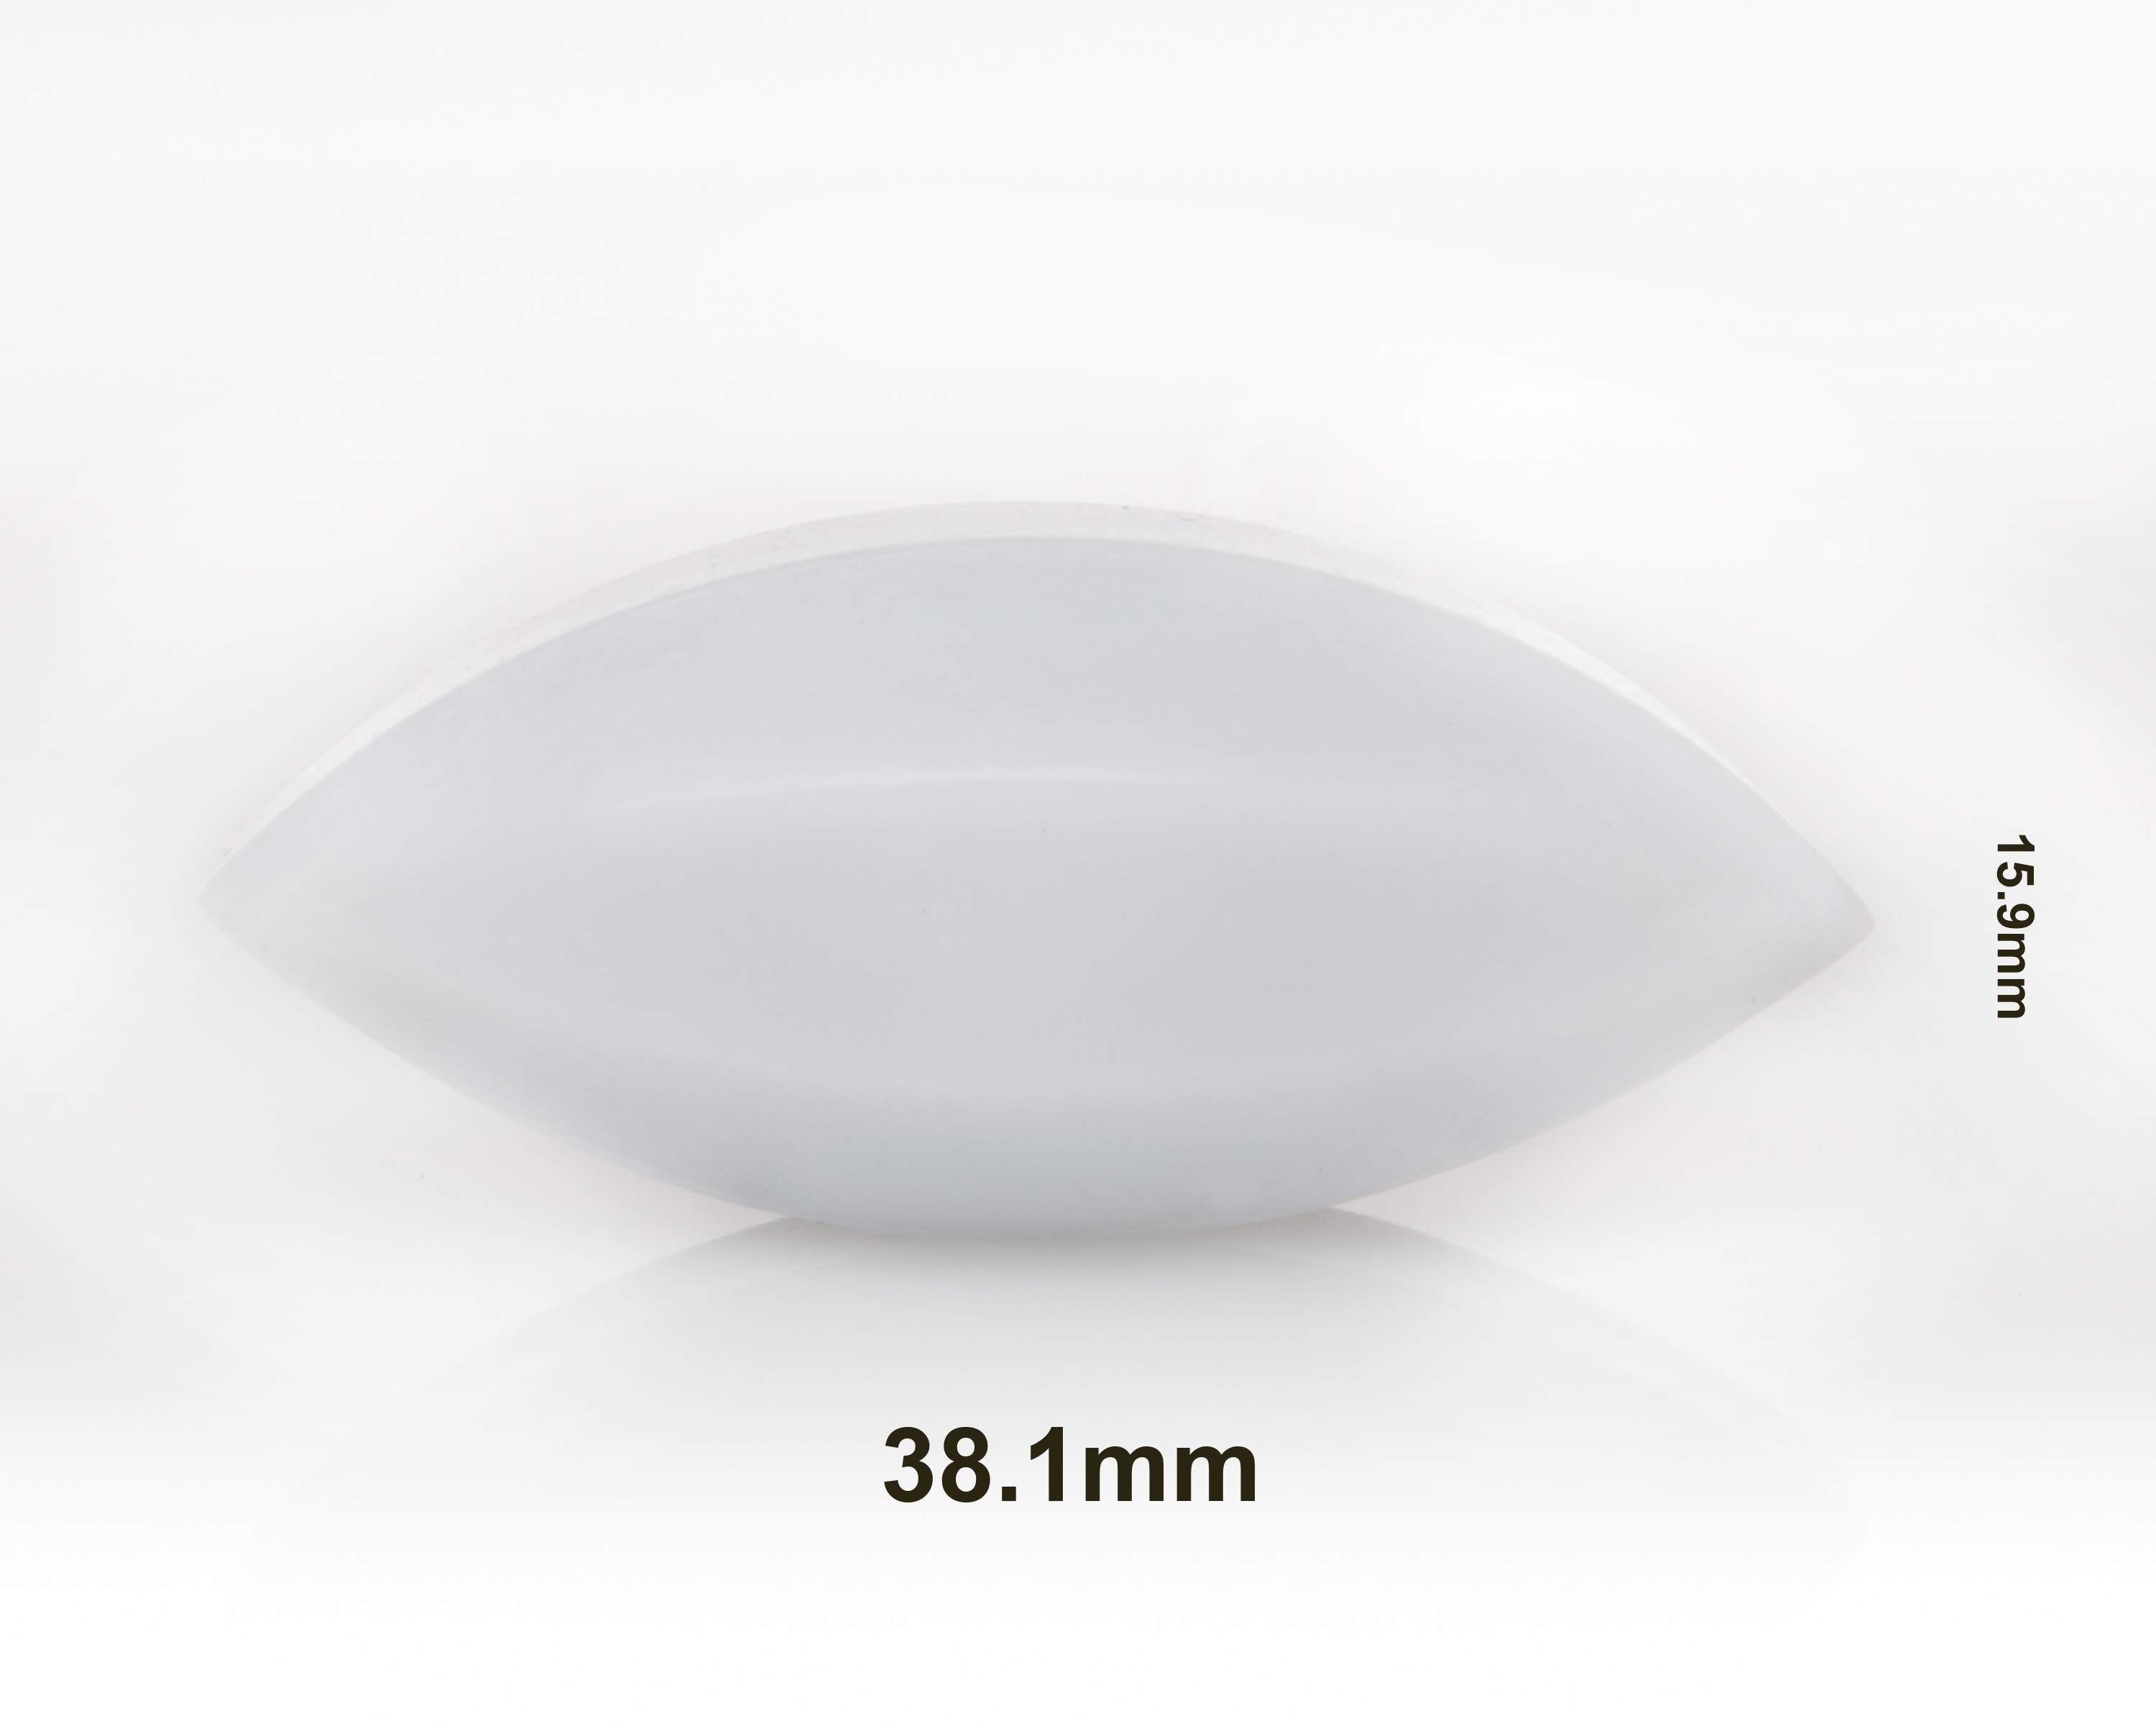 SP Bel-Art Spinbar Teflon Elliptical (Egg-Shaped) Magnetic Stirring Bar; 38.1 x 15.9mm, White